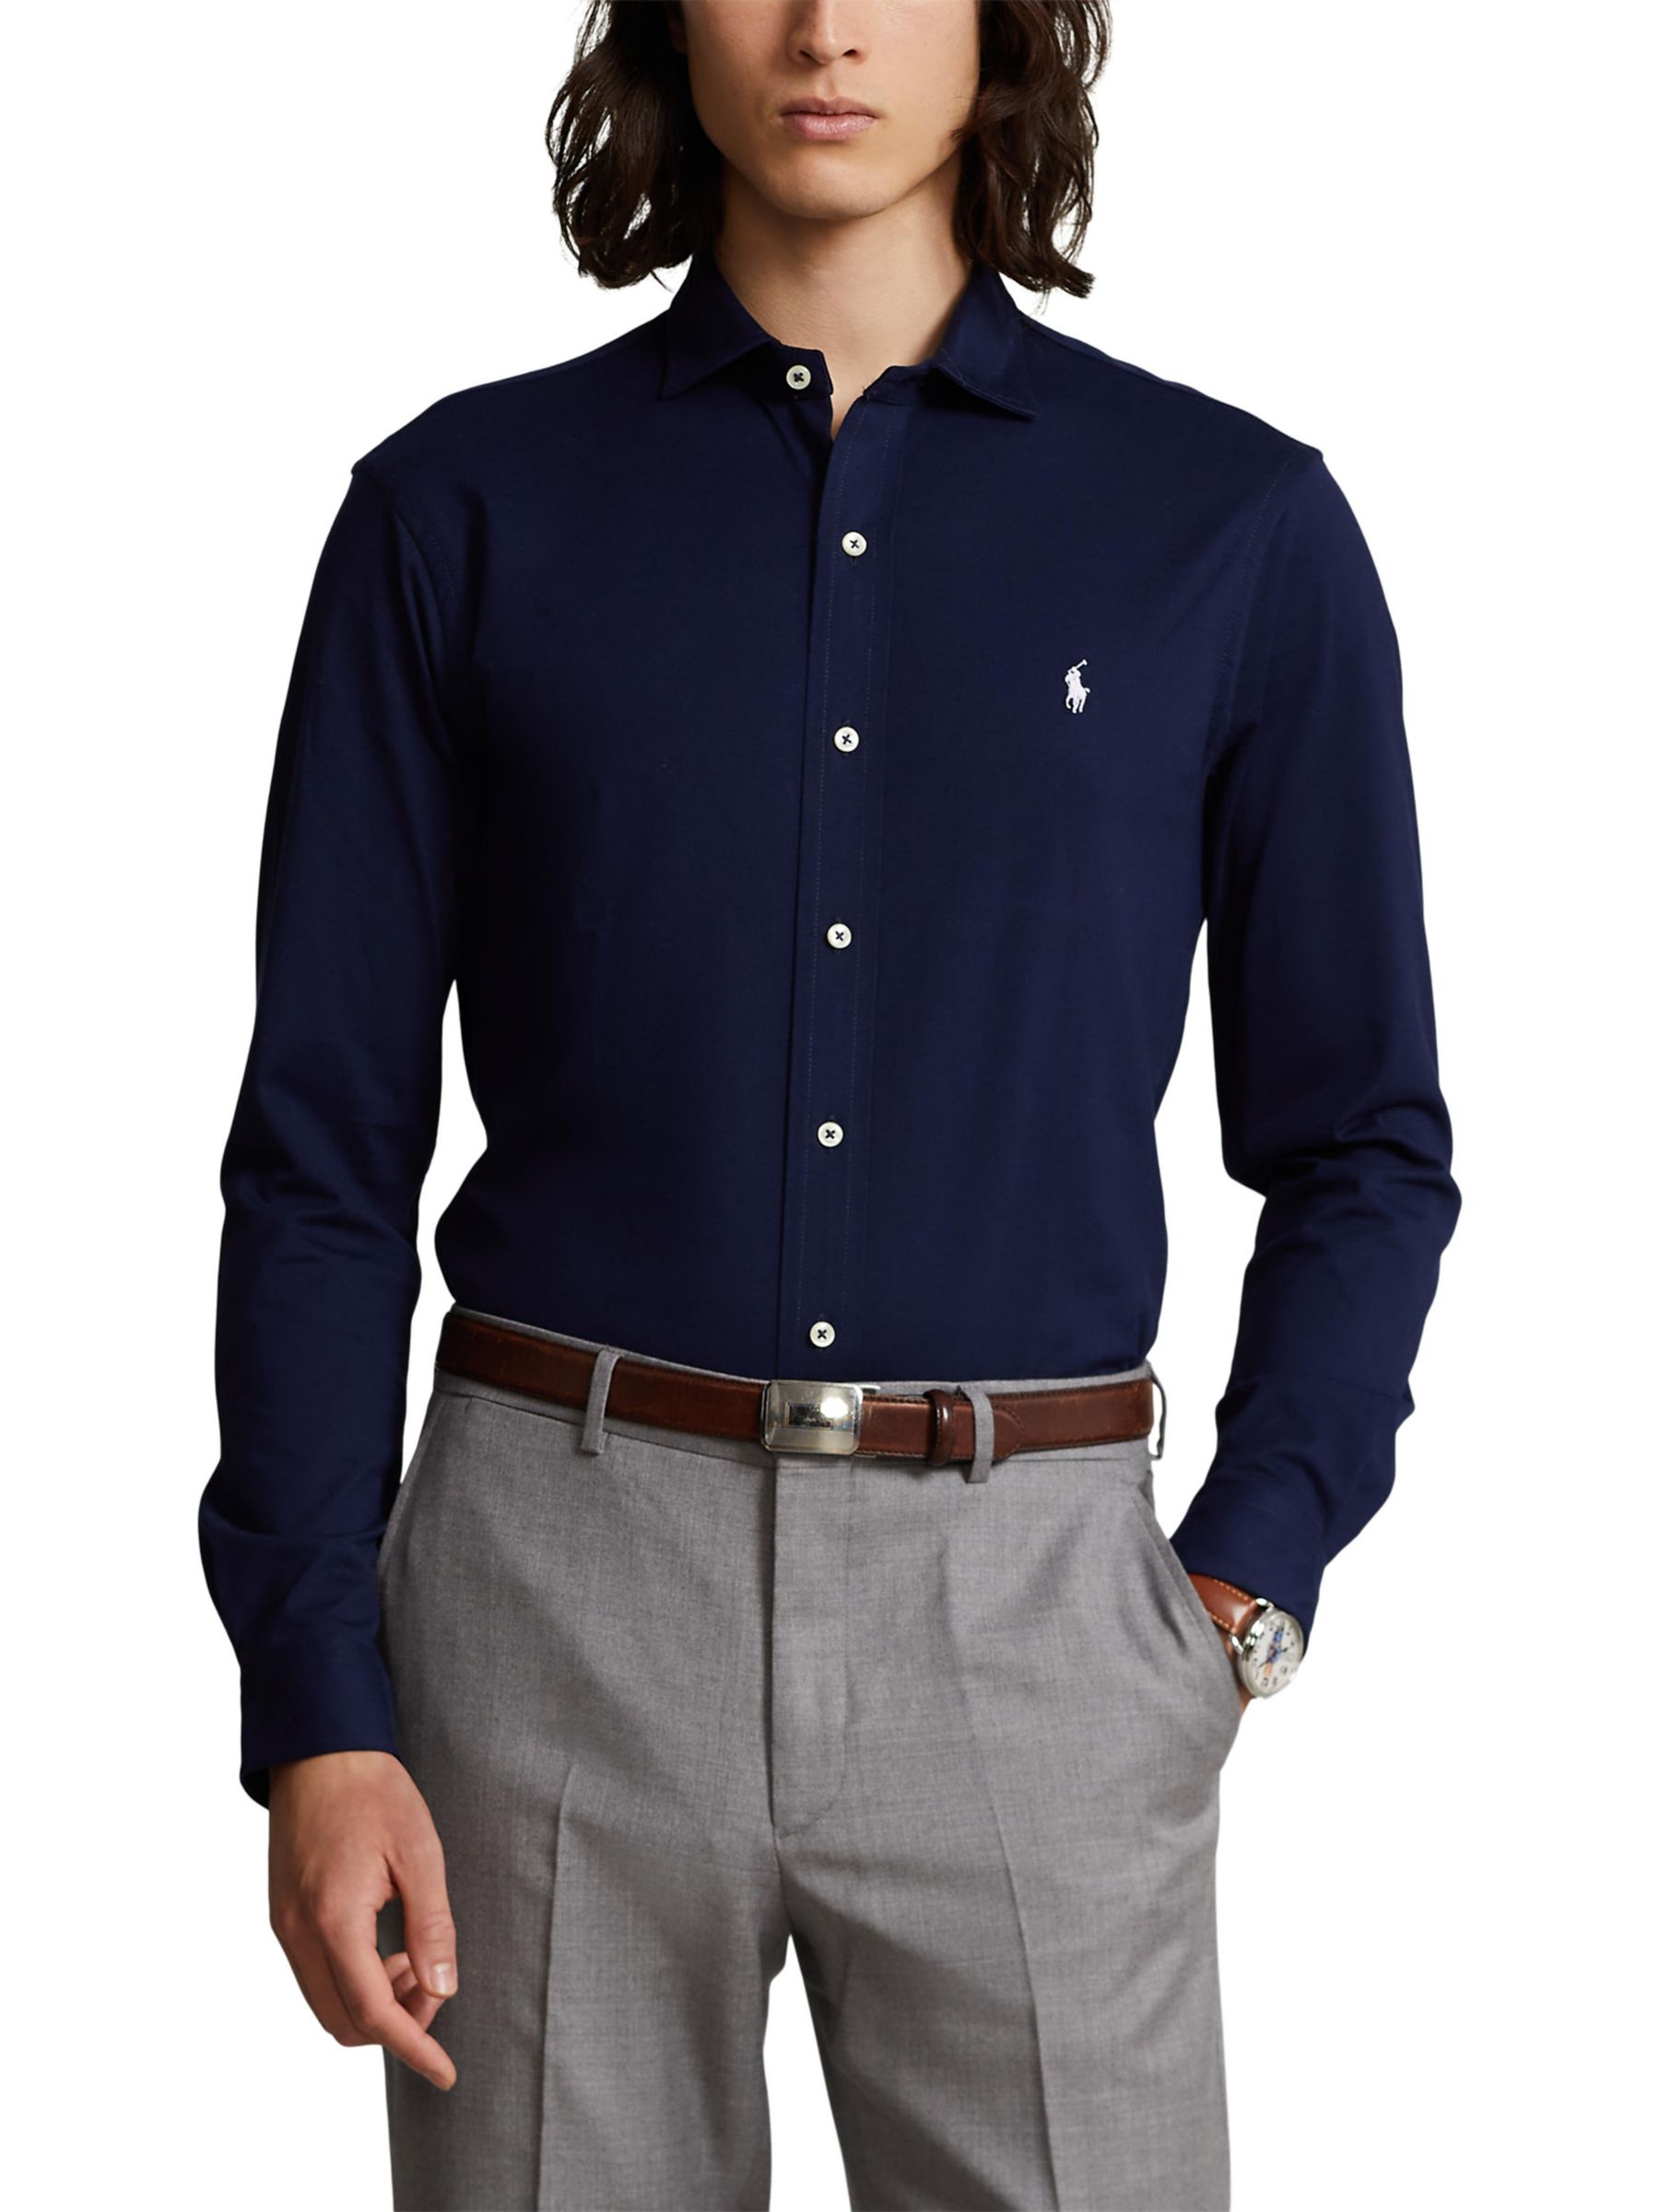 Polo Ralph Lauren Long Sleeve Cotton Shirt, Cruise Navy, S